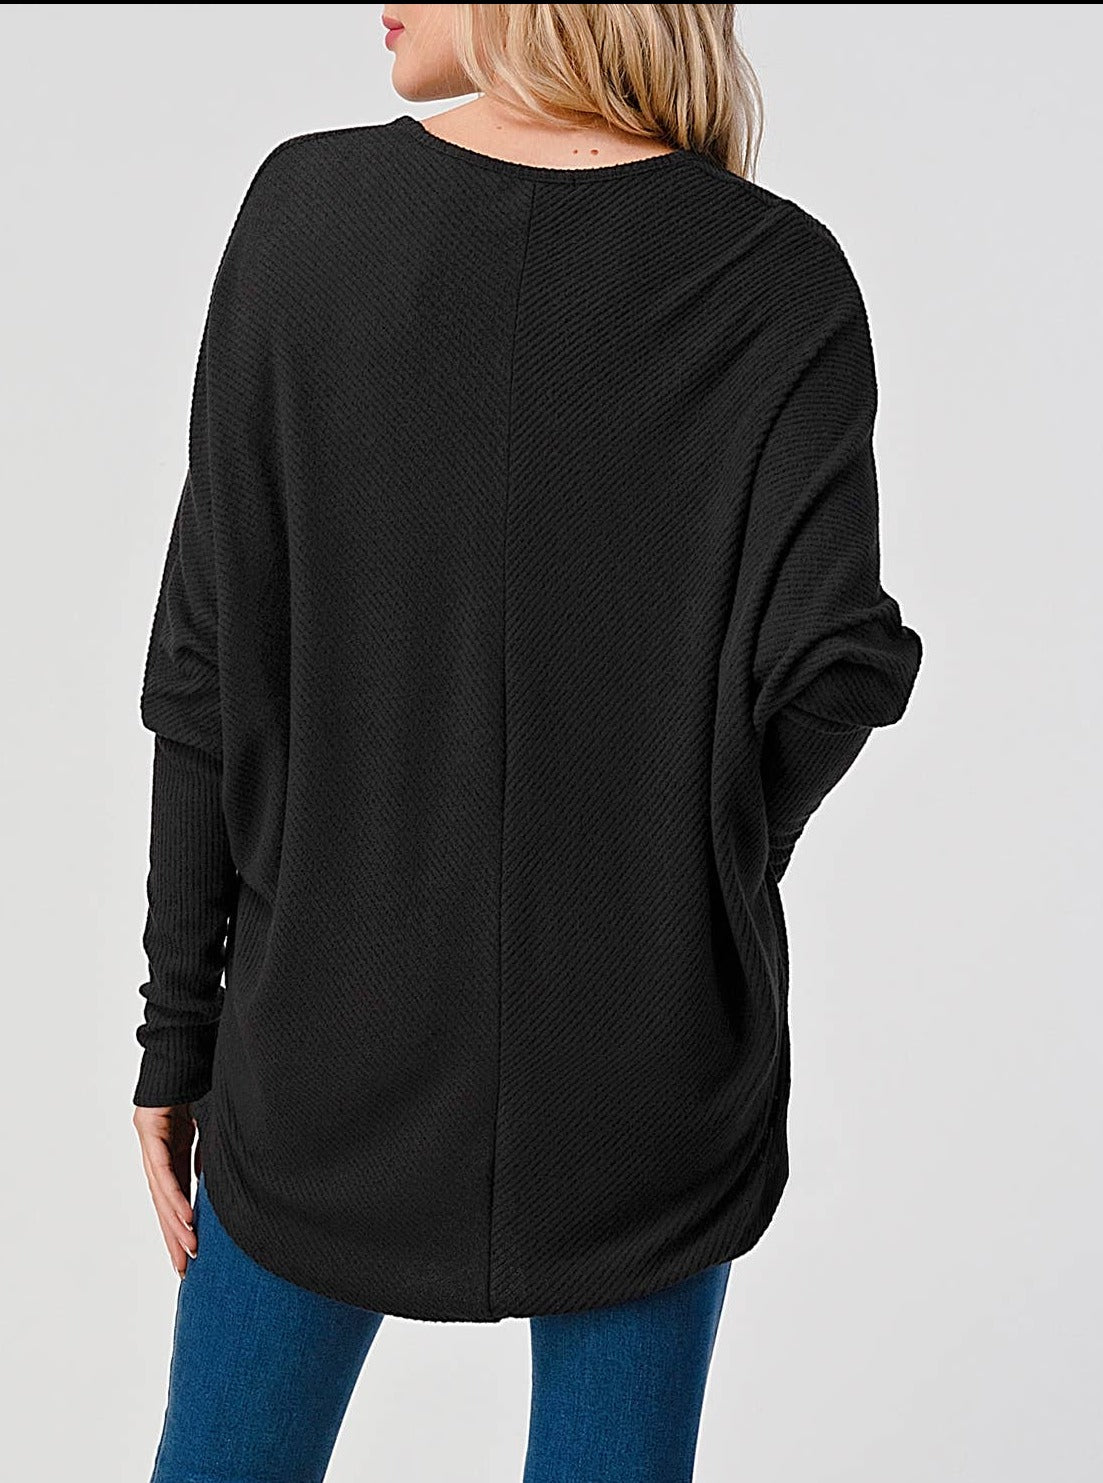 Heimious Chevron Rib Knit Sweater - Black